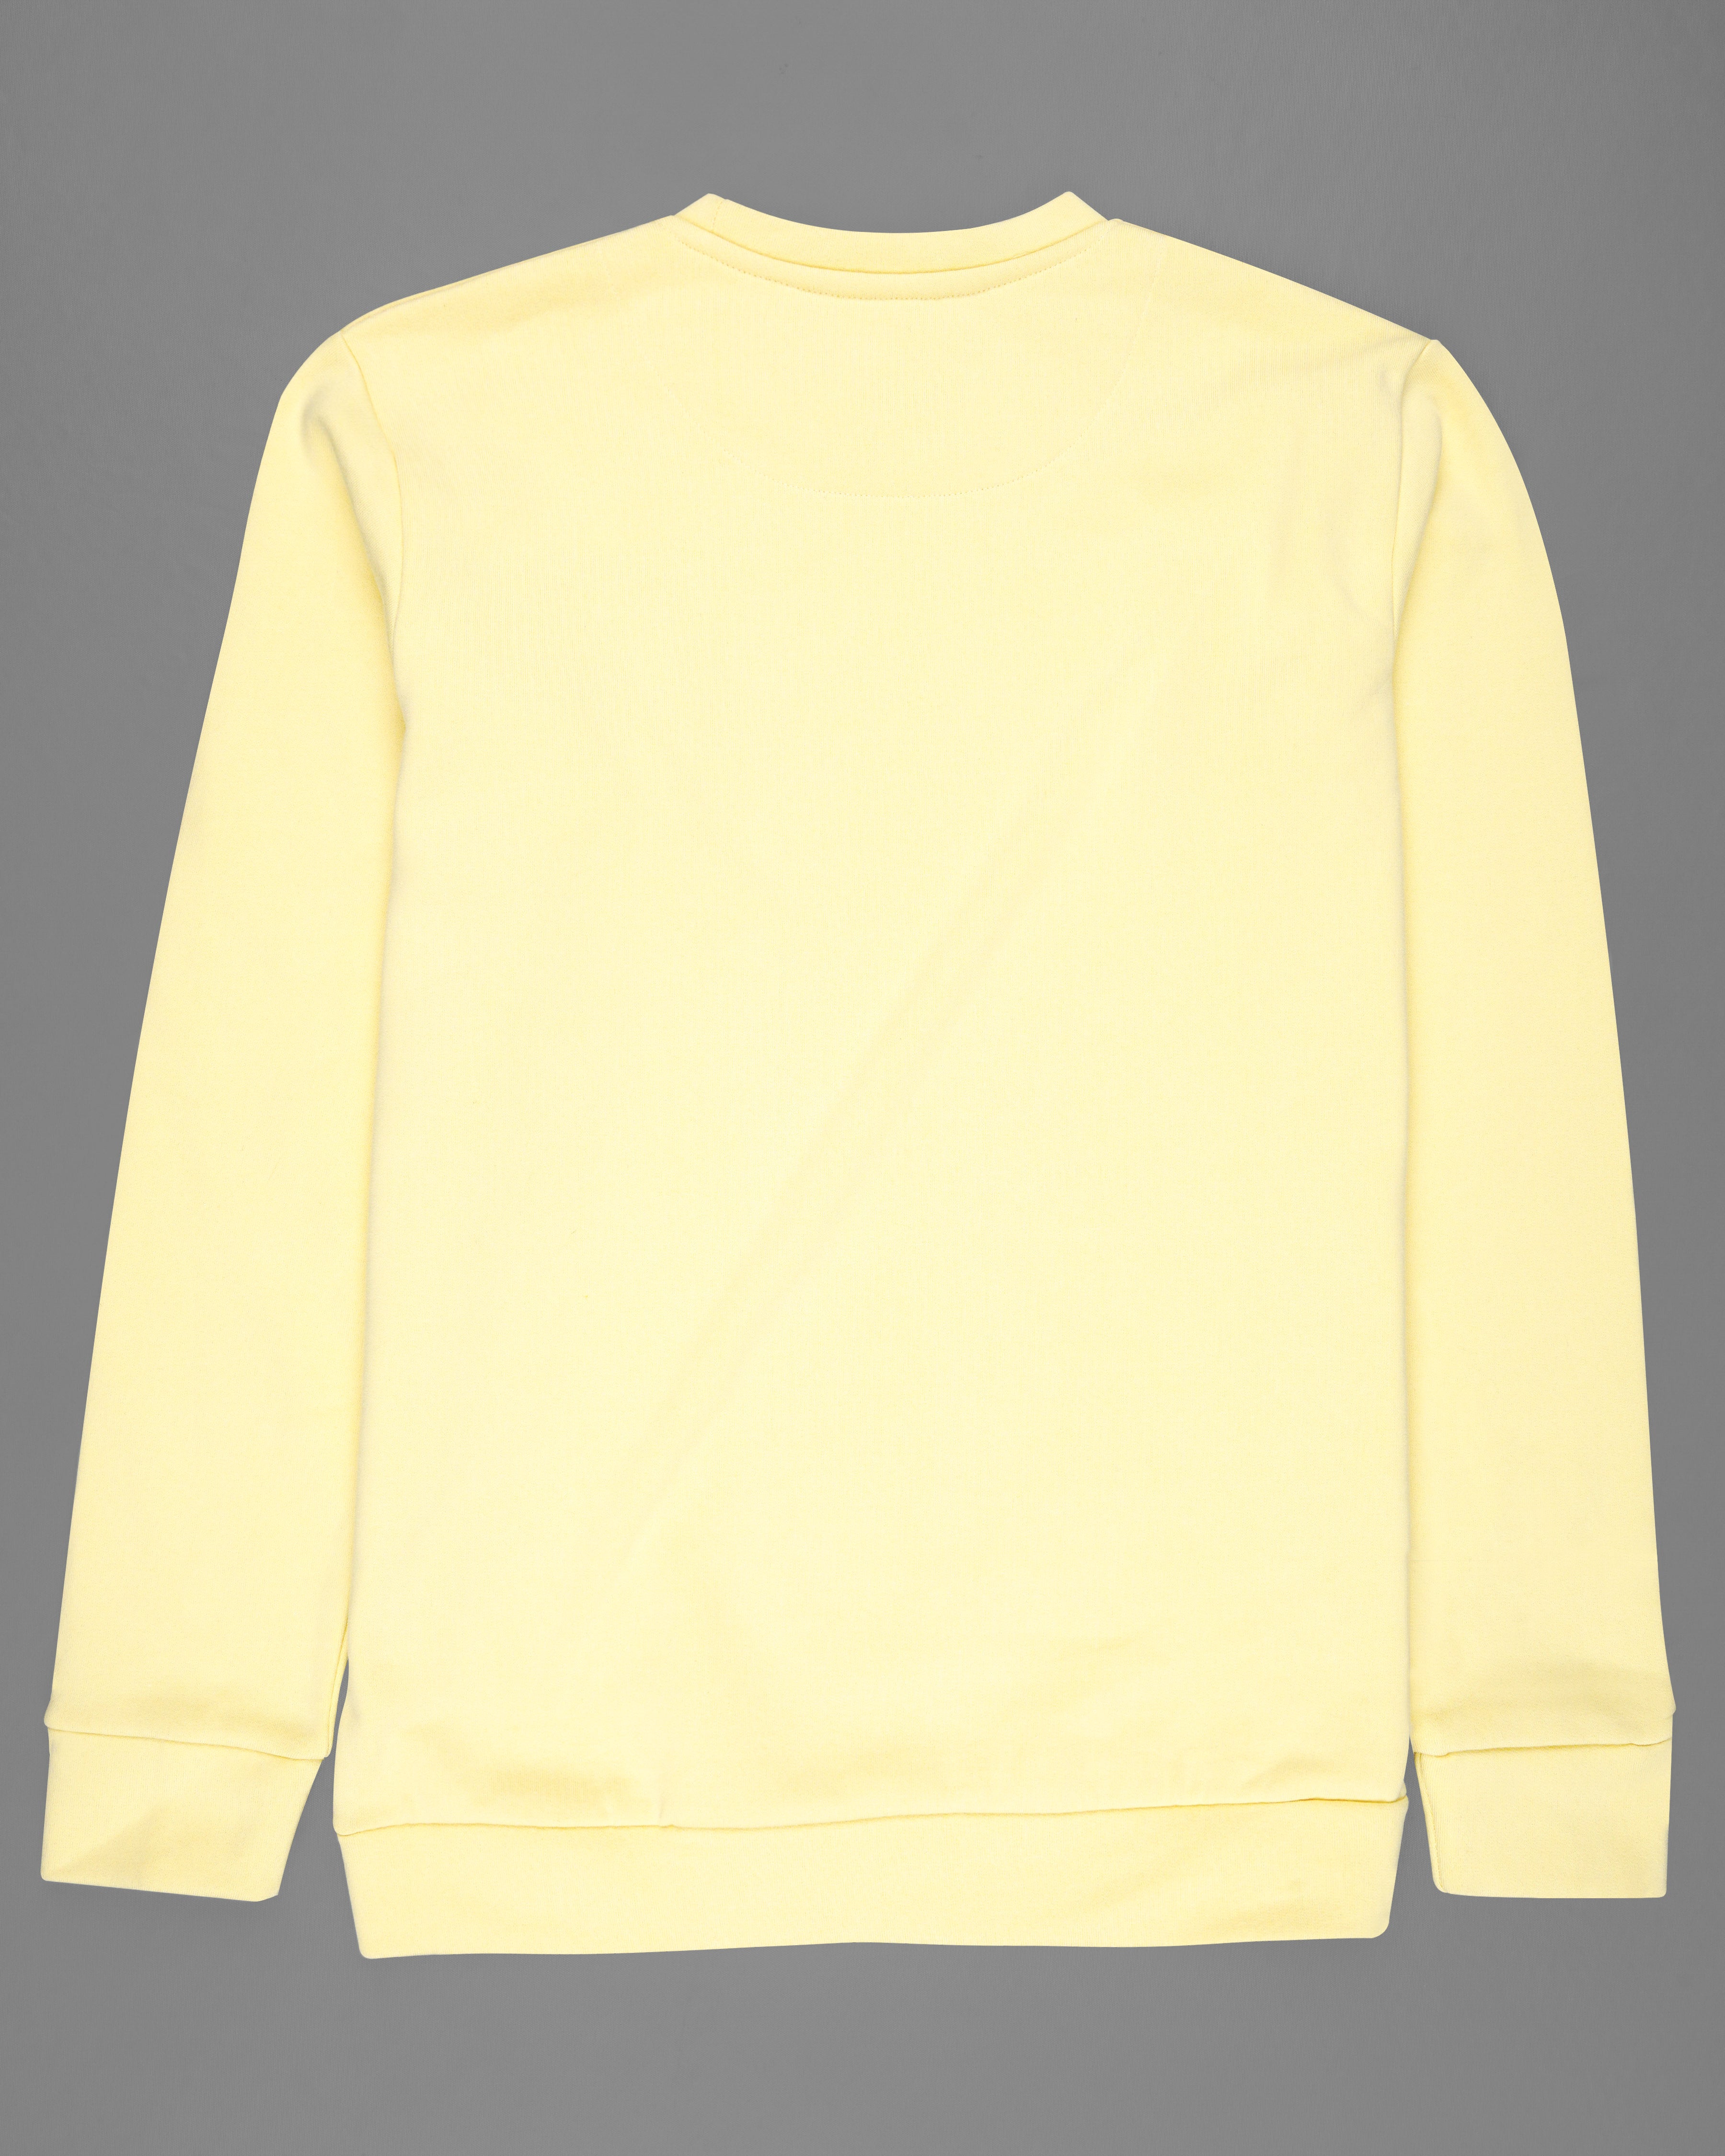 Colonial Yellow Full Sleeve Premium Cotton Heavyweight Sweatshirt 
TS617-C, TS617-M, TS617-L, TS617-XL, TS617-XXL, TS617-3XL, TS617-4XL